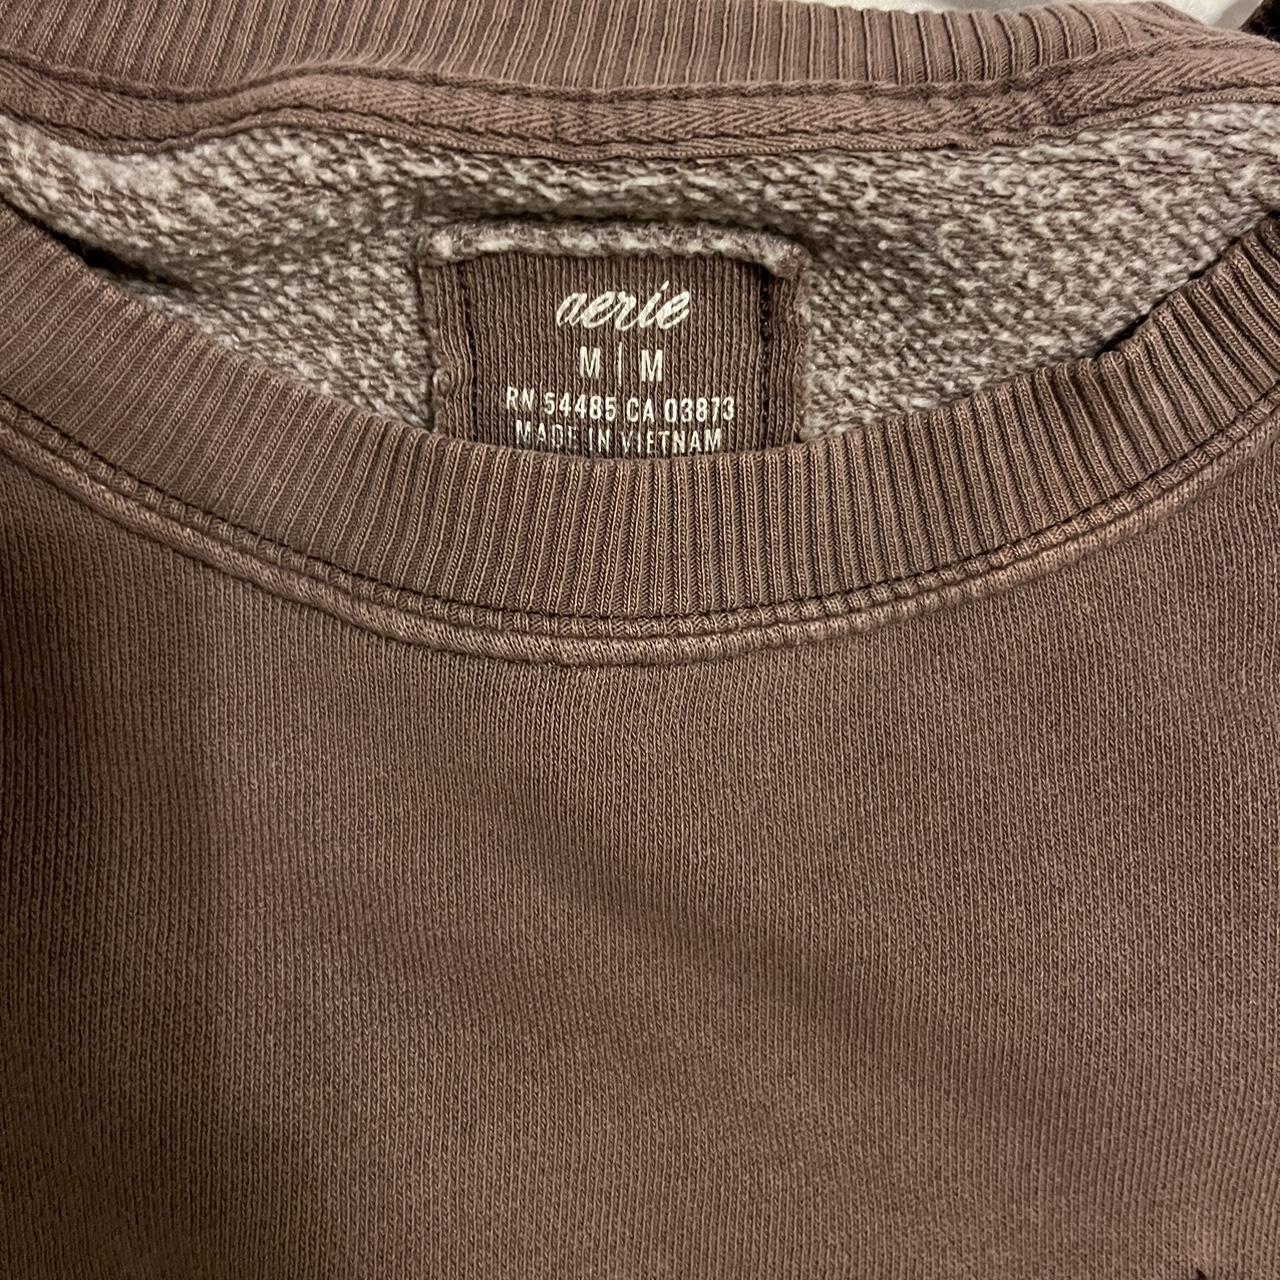 Aerie brown Crewneck sweatshirt with front pocket... - Depop